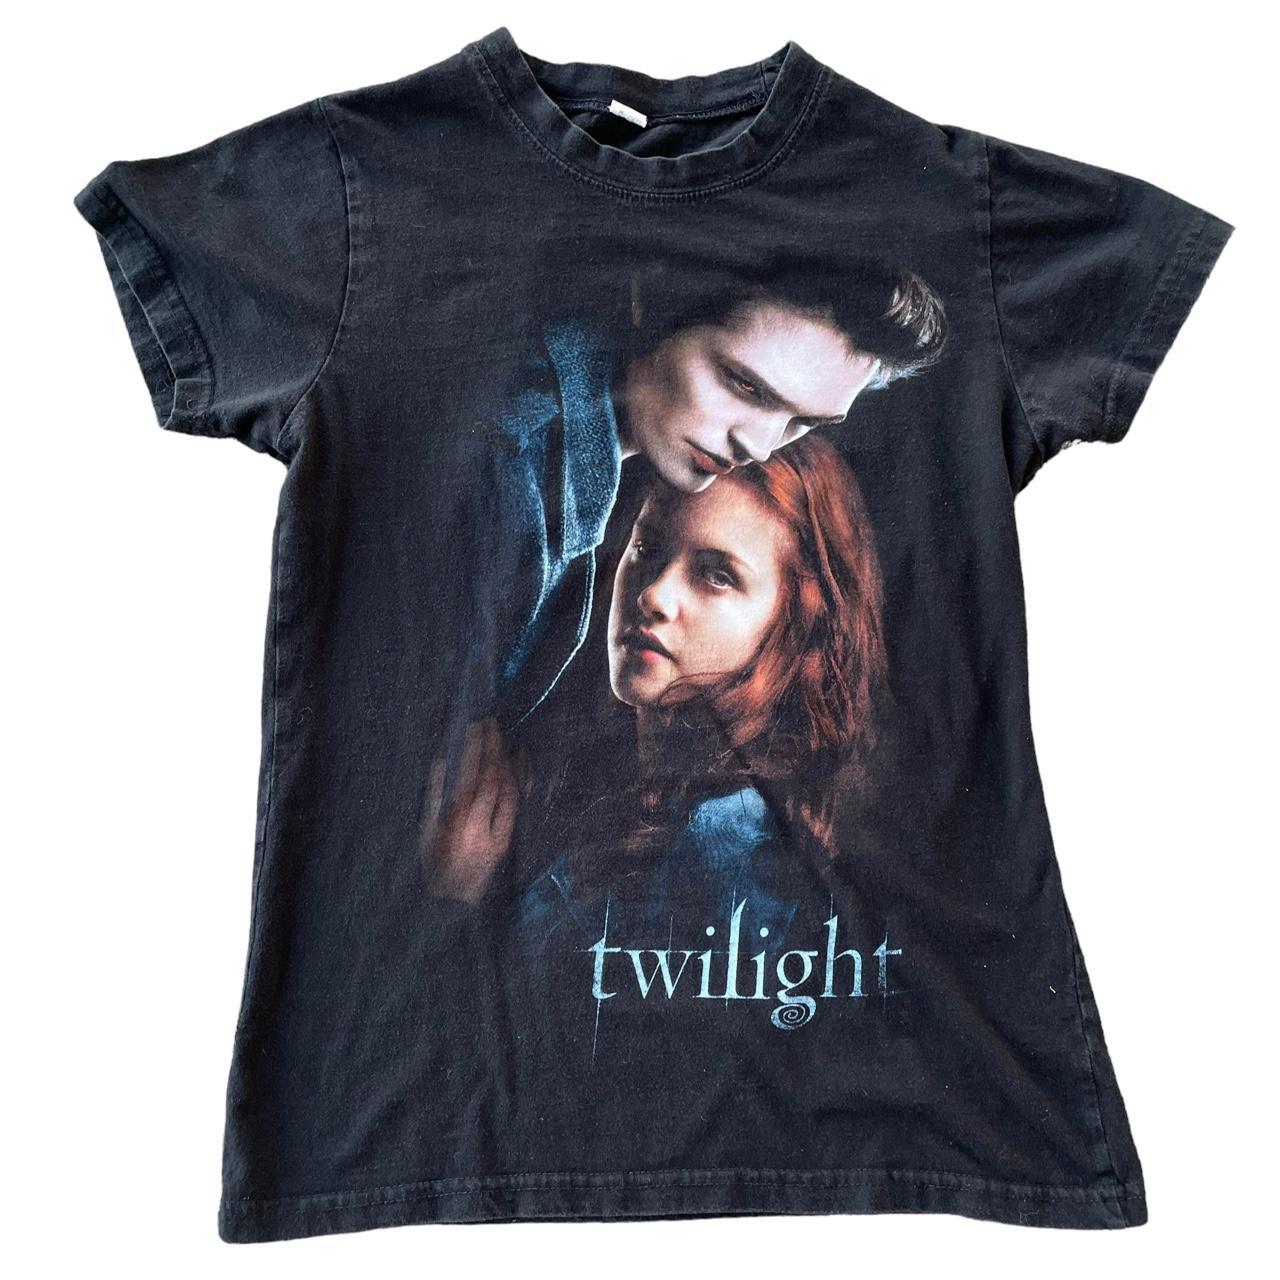 Product Image 1 - Twilight Merch T-Shirt

Iconic twilight bella